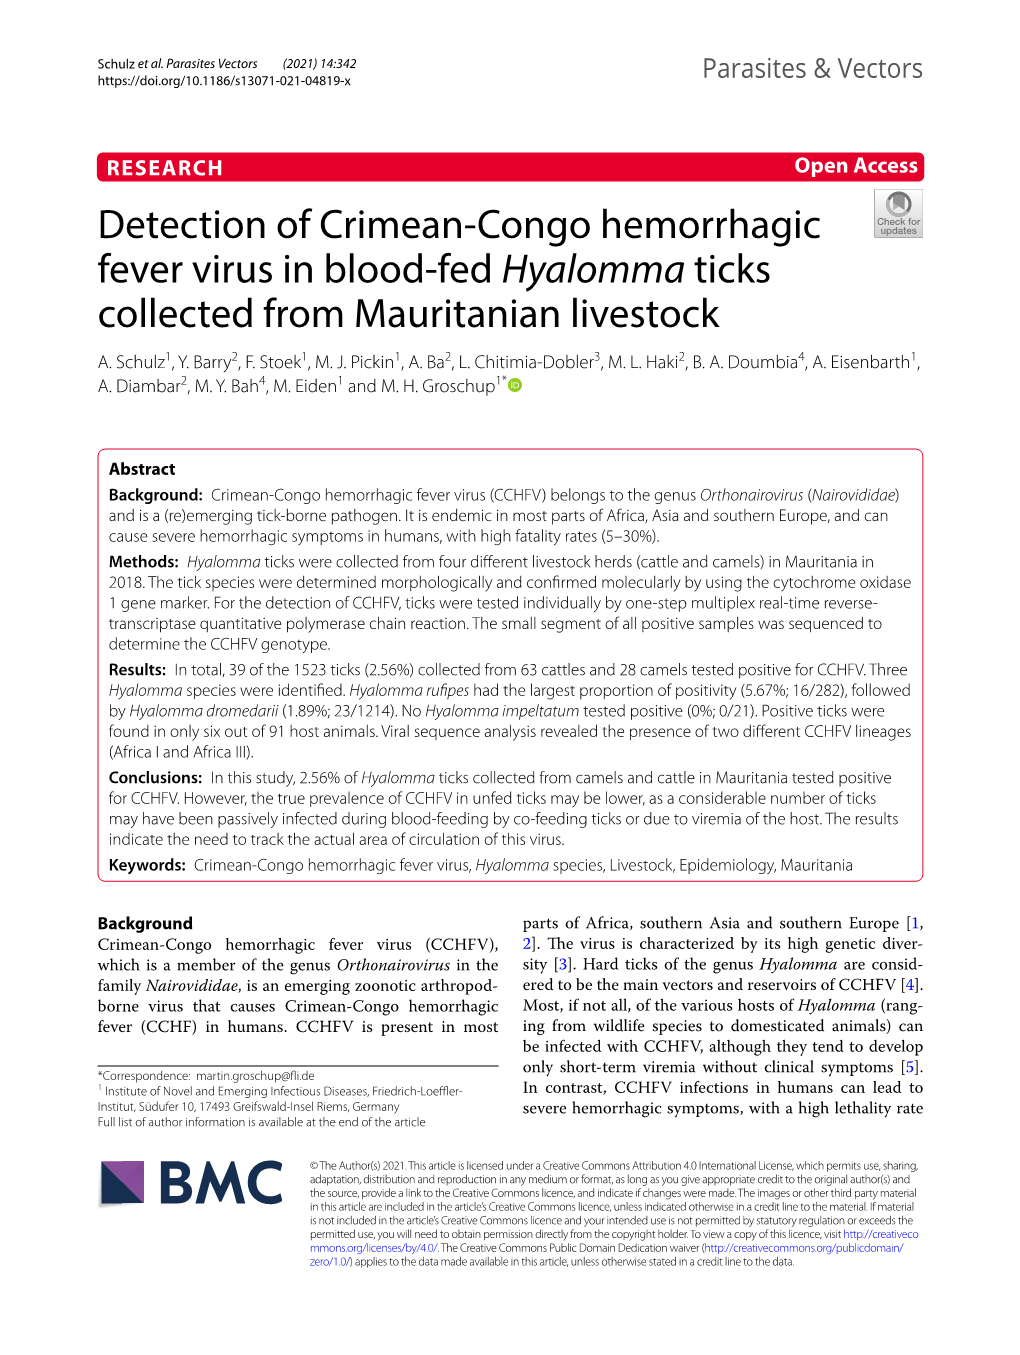 Detection of Crimean-Congo Hemorrhagic Fever Virus in Blood